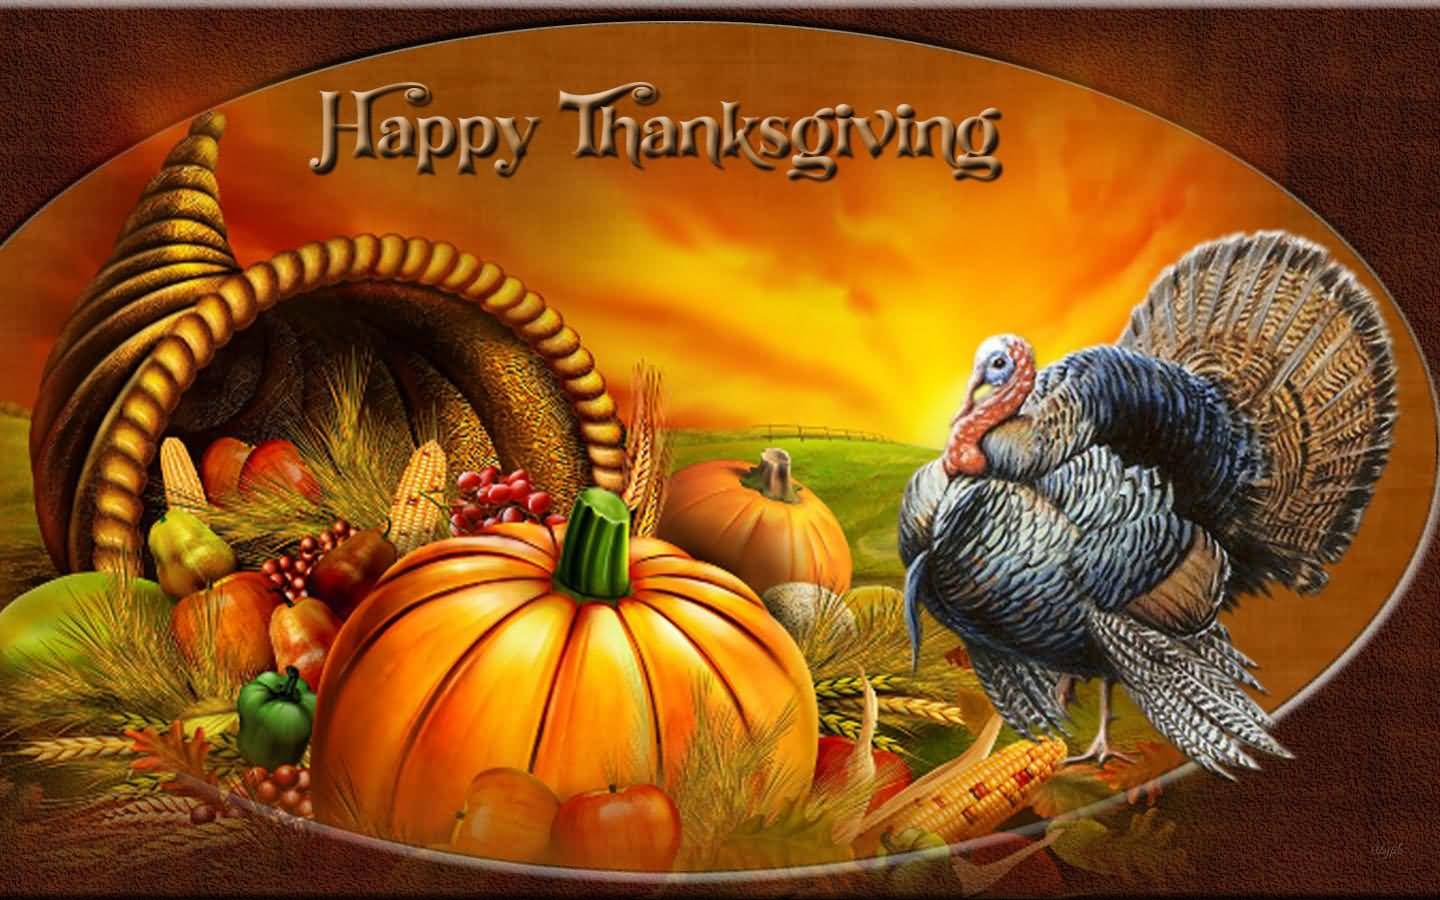 The Db2 Portal Blog: Happy Thanksgiving 2017